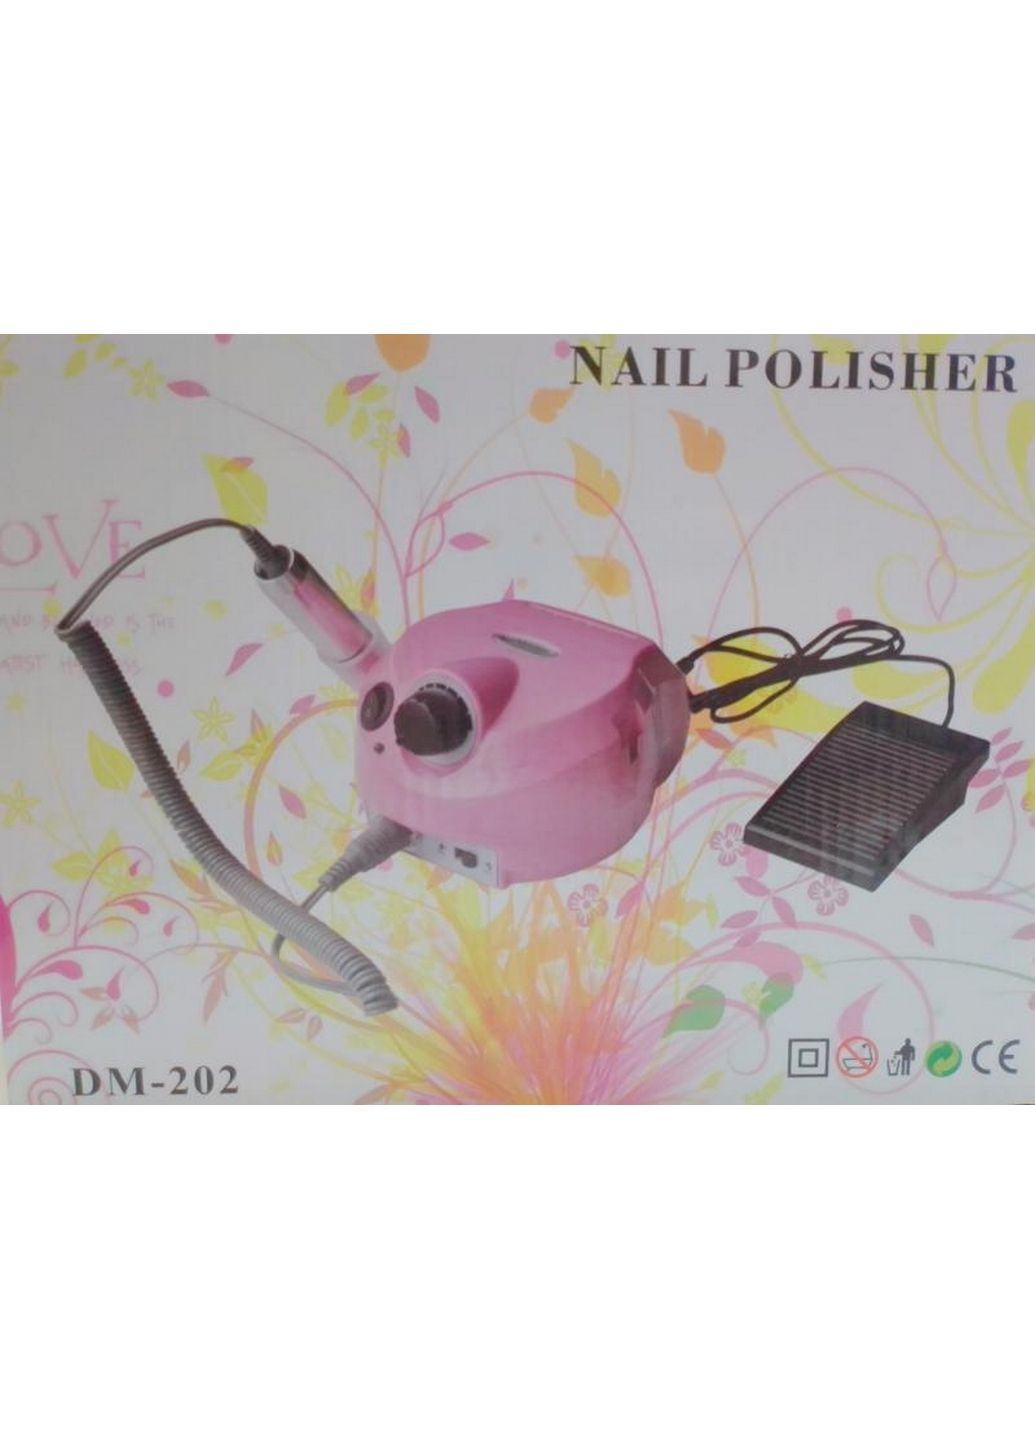 Фрезер для маникюра nail polisner dм-201 Nail Drill (282582097)